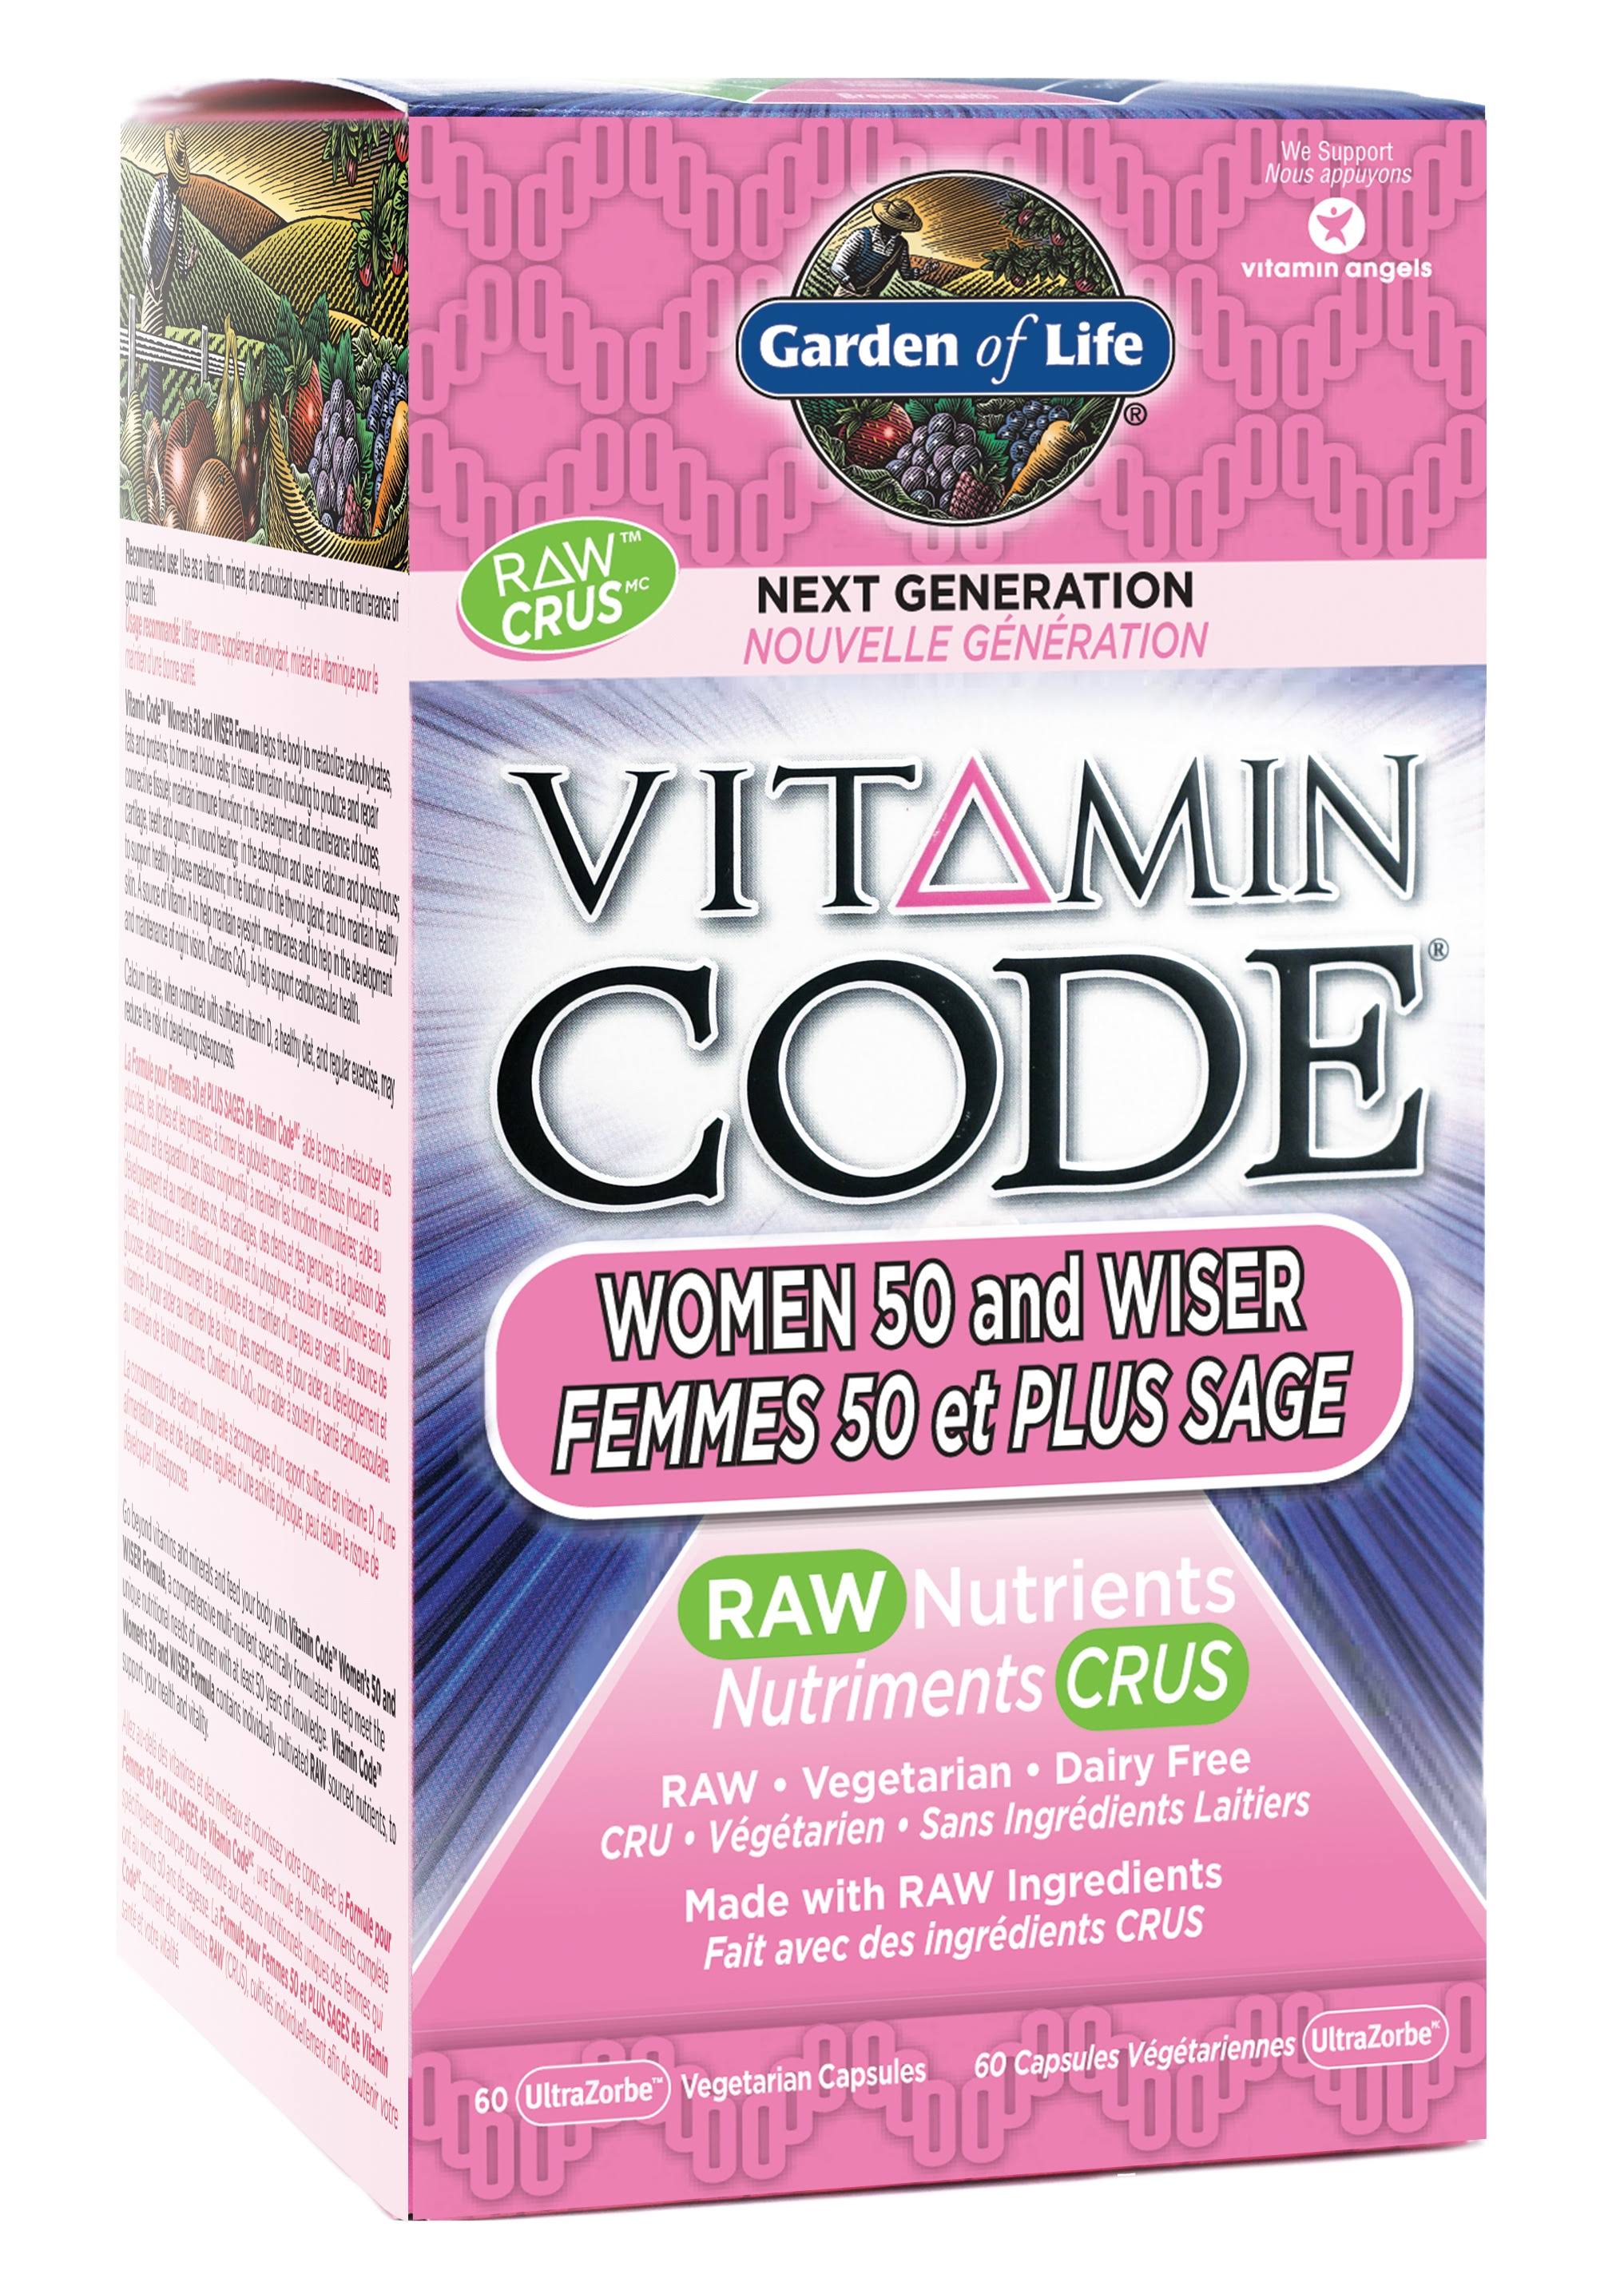 Garden of Life Vitamin Code Women 50 and Wiser